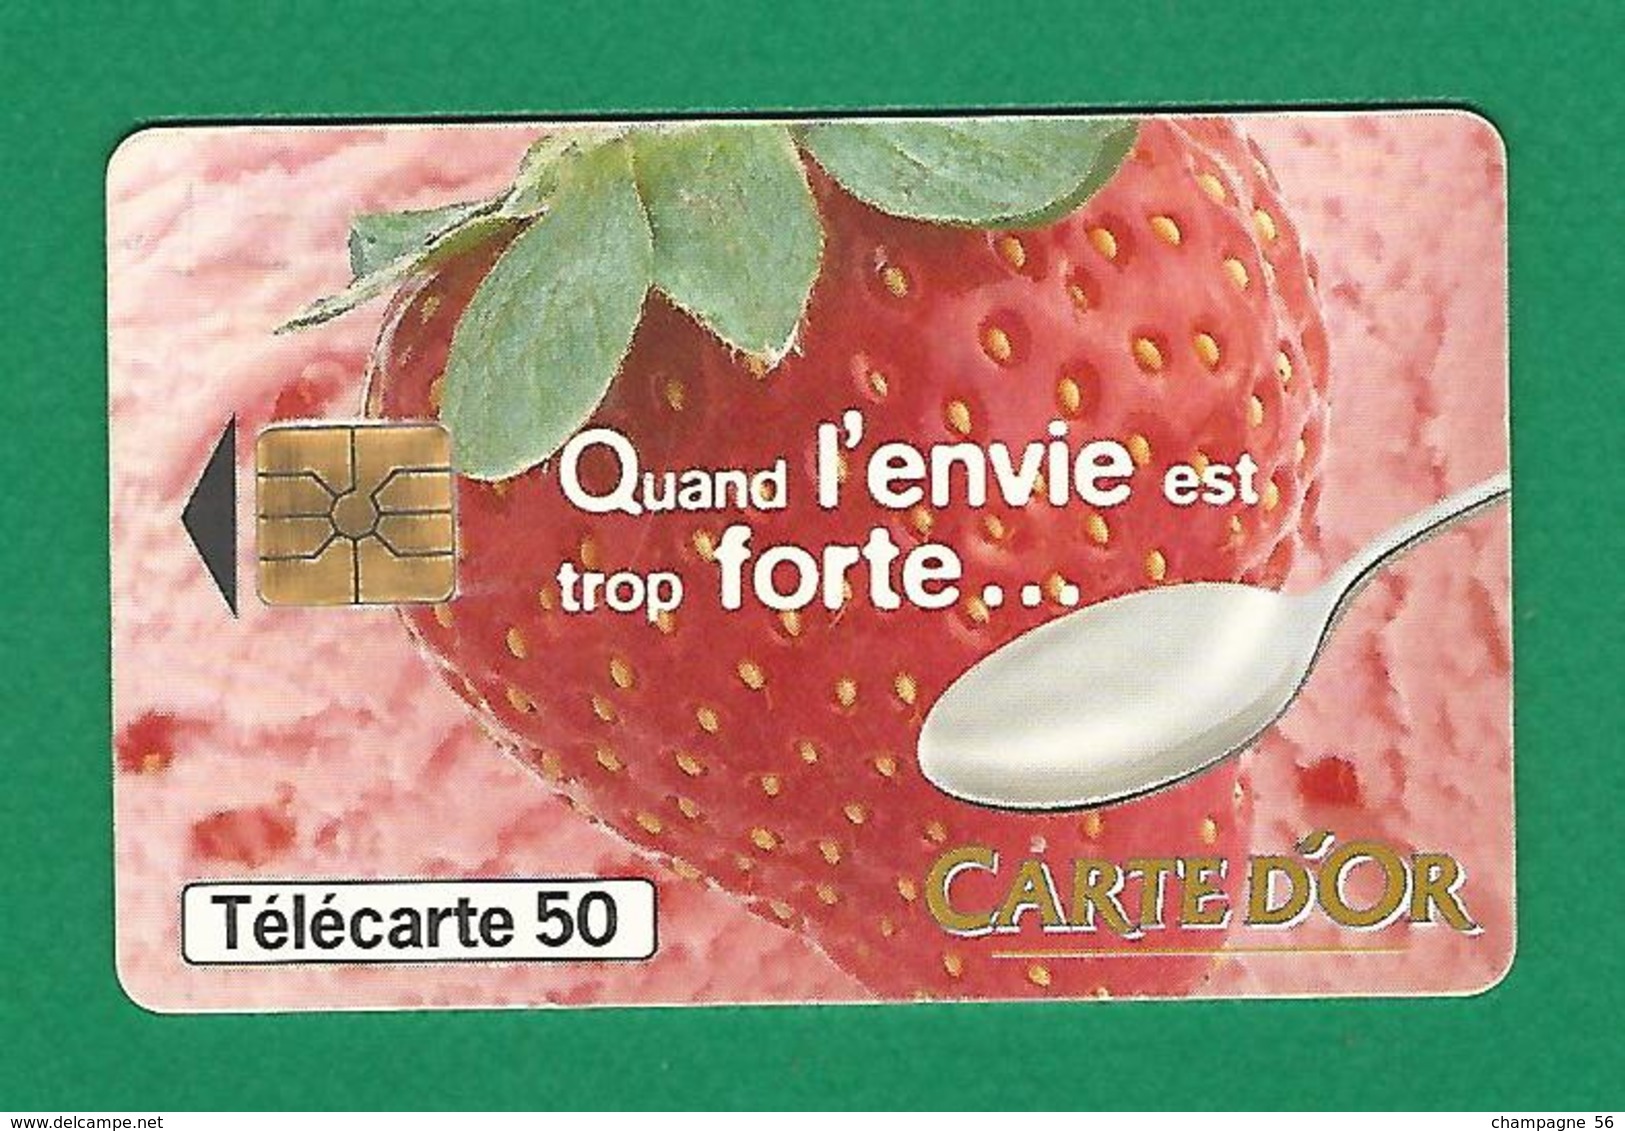 VARIÉTÉS 05 / 1997  CARTE D'OR   PUCE GEM1A   50 UNITÉS - Variétés